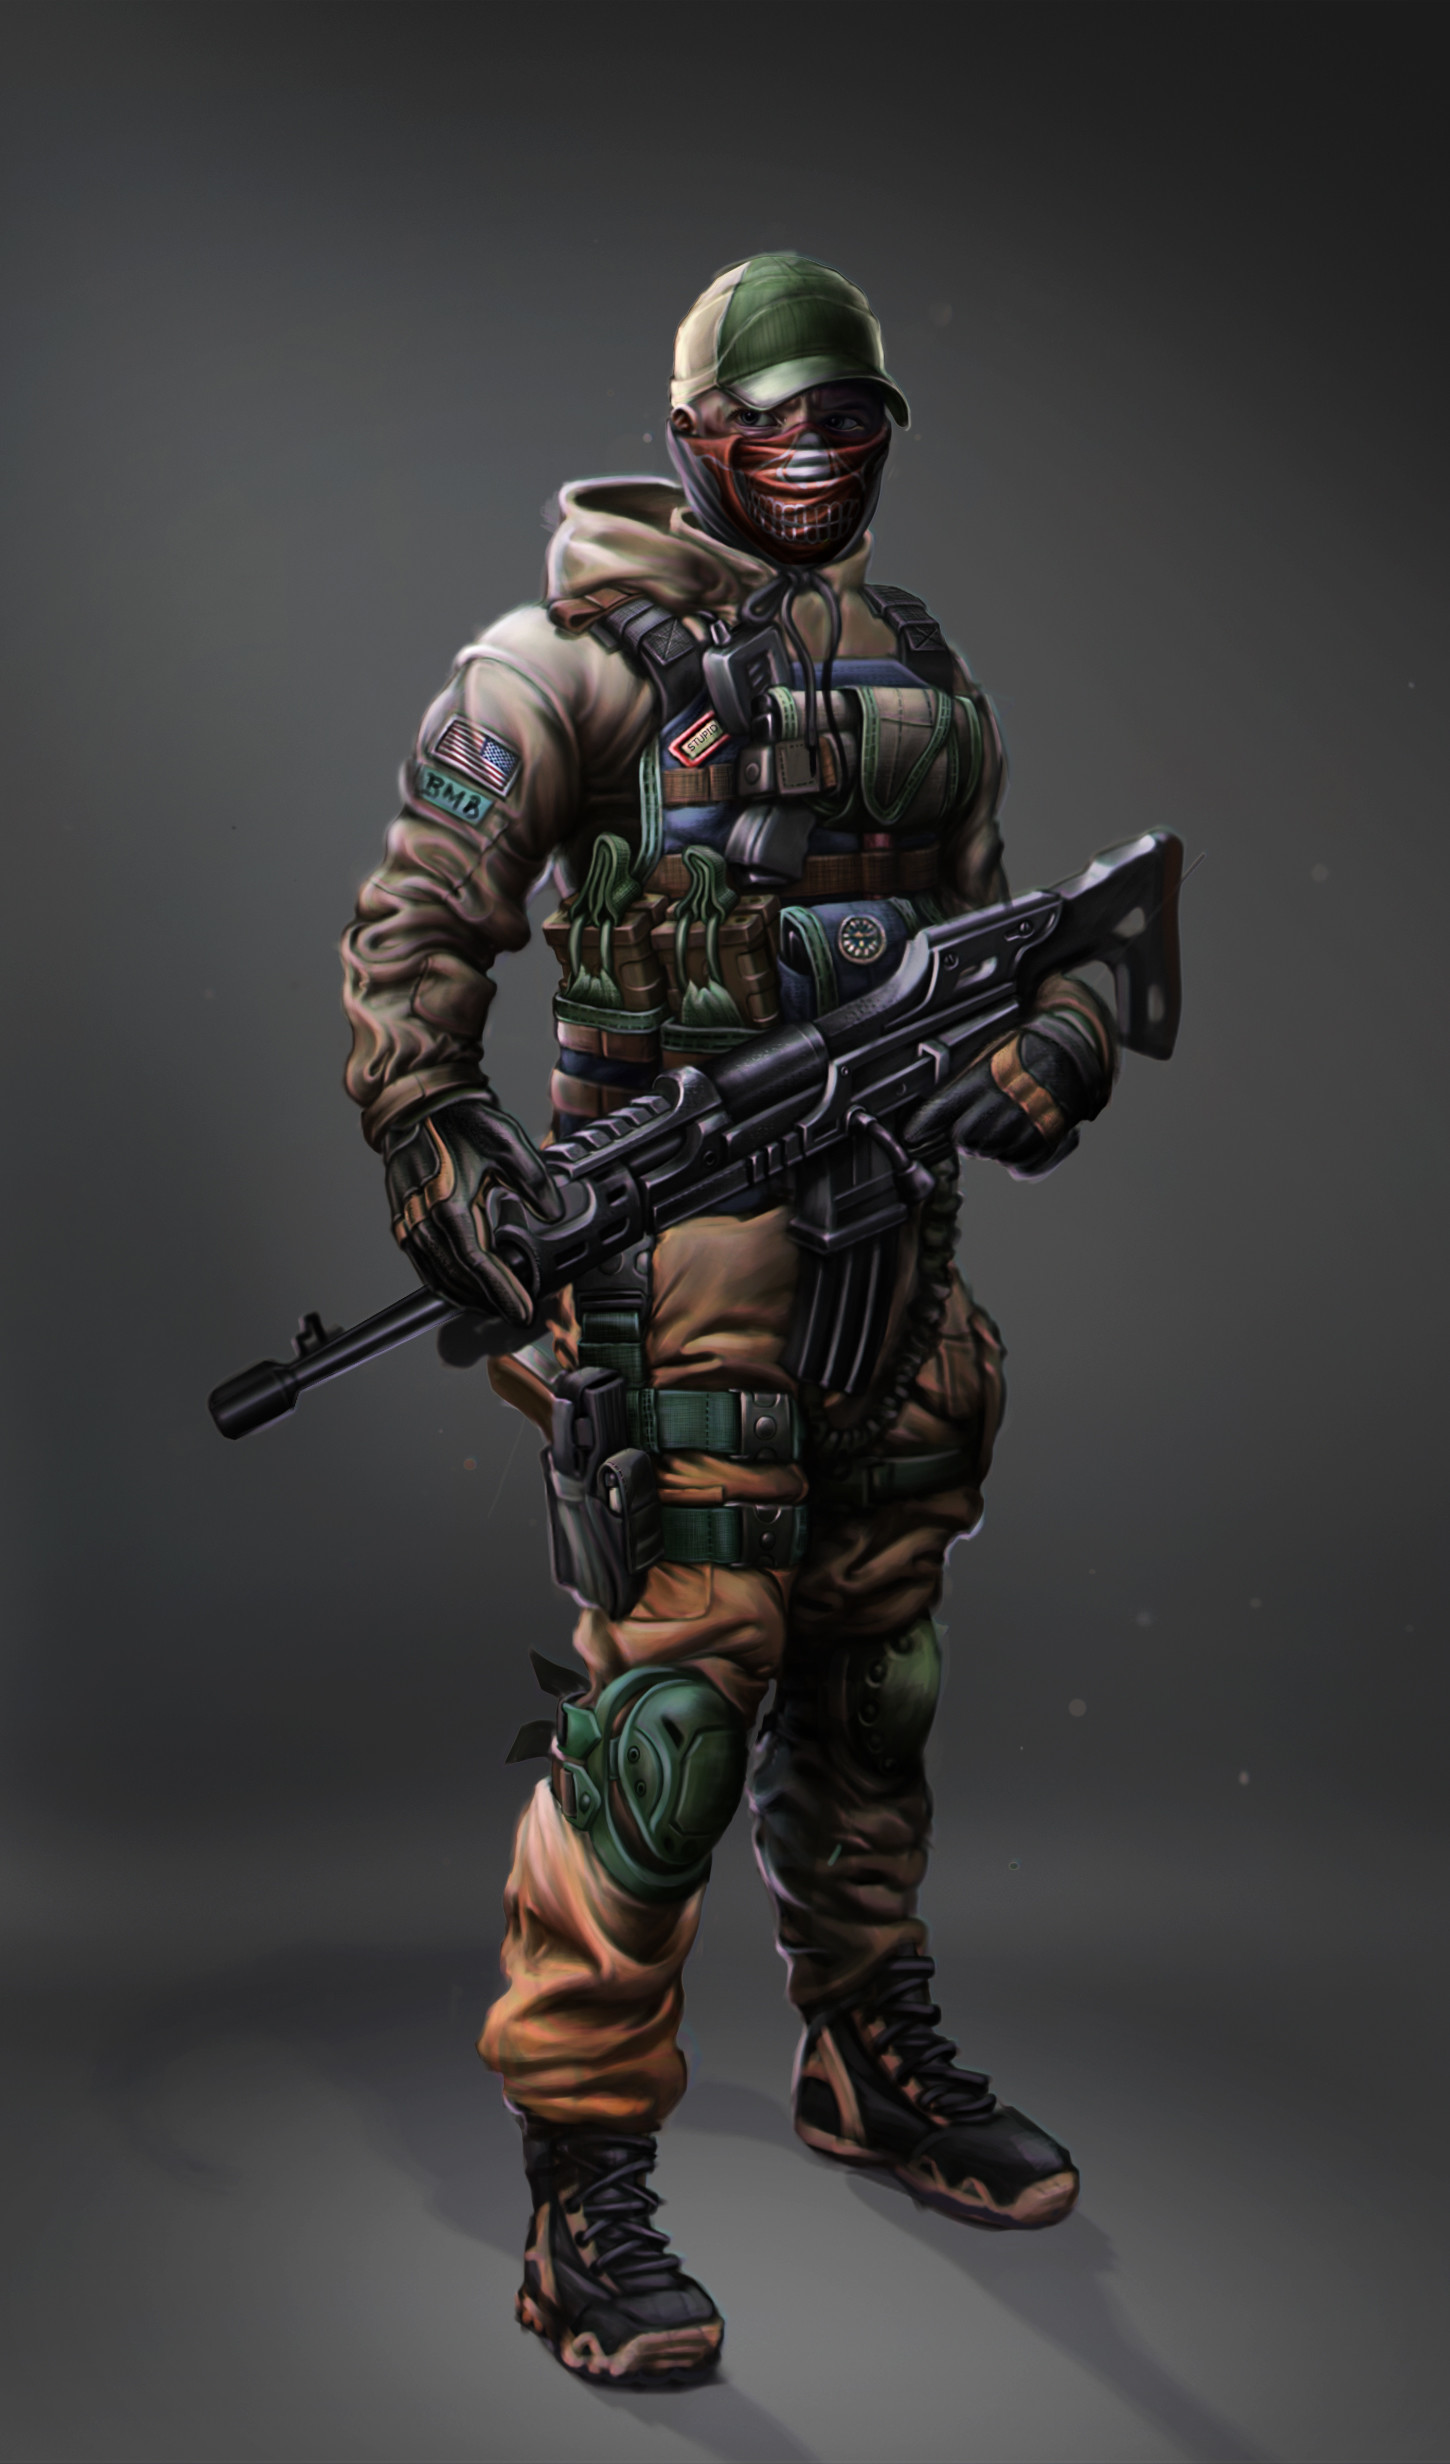 ArtStation - Soldier Concept